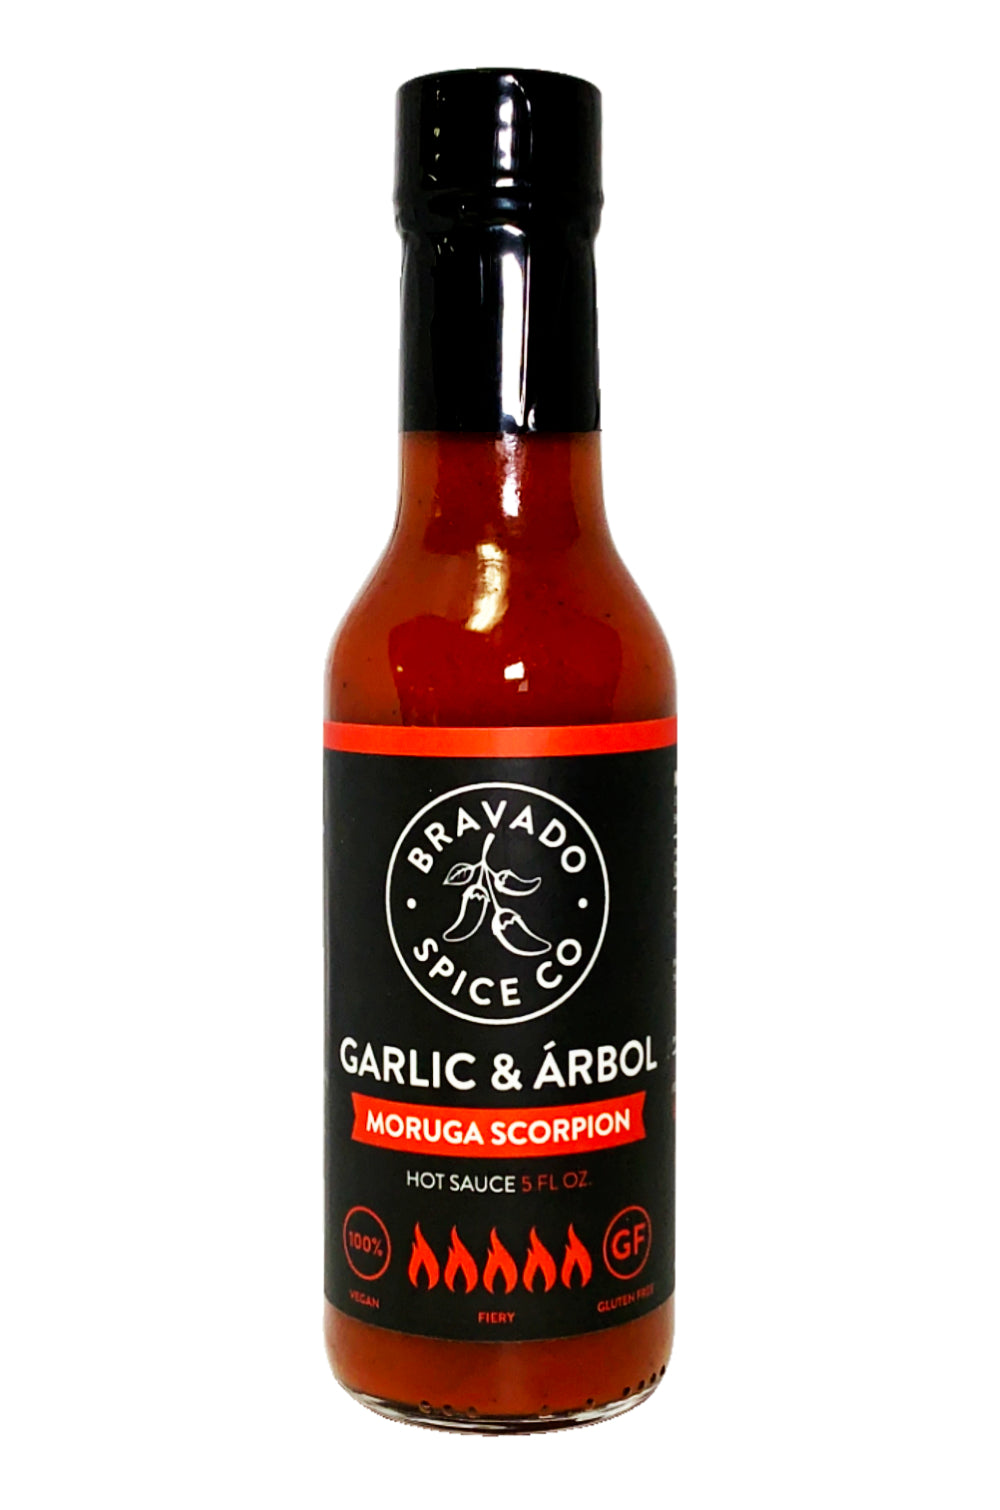 Bravado Garlic and Arbol Moruga Scorpion